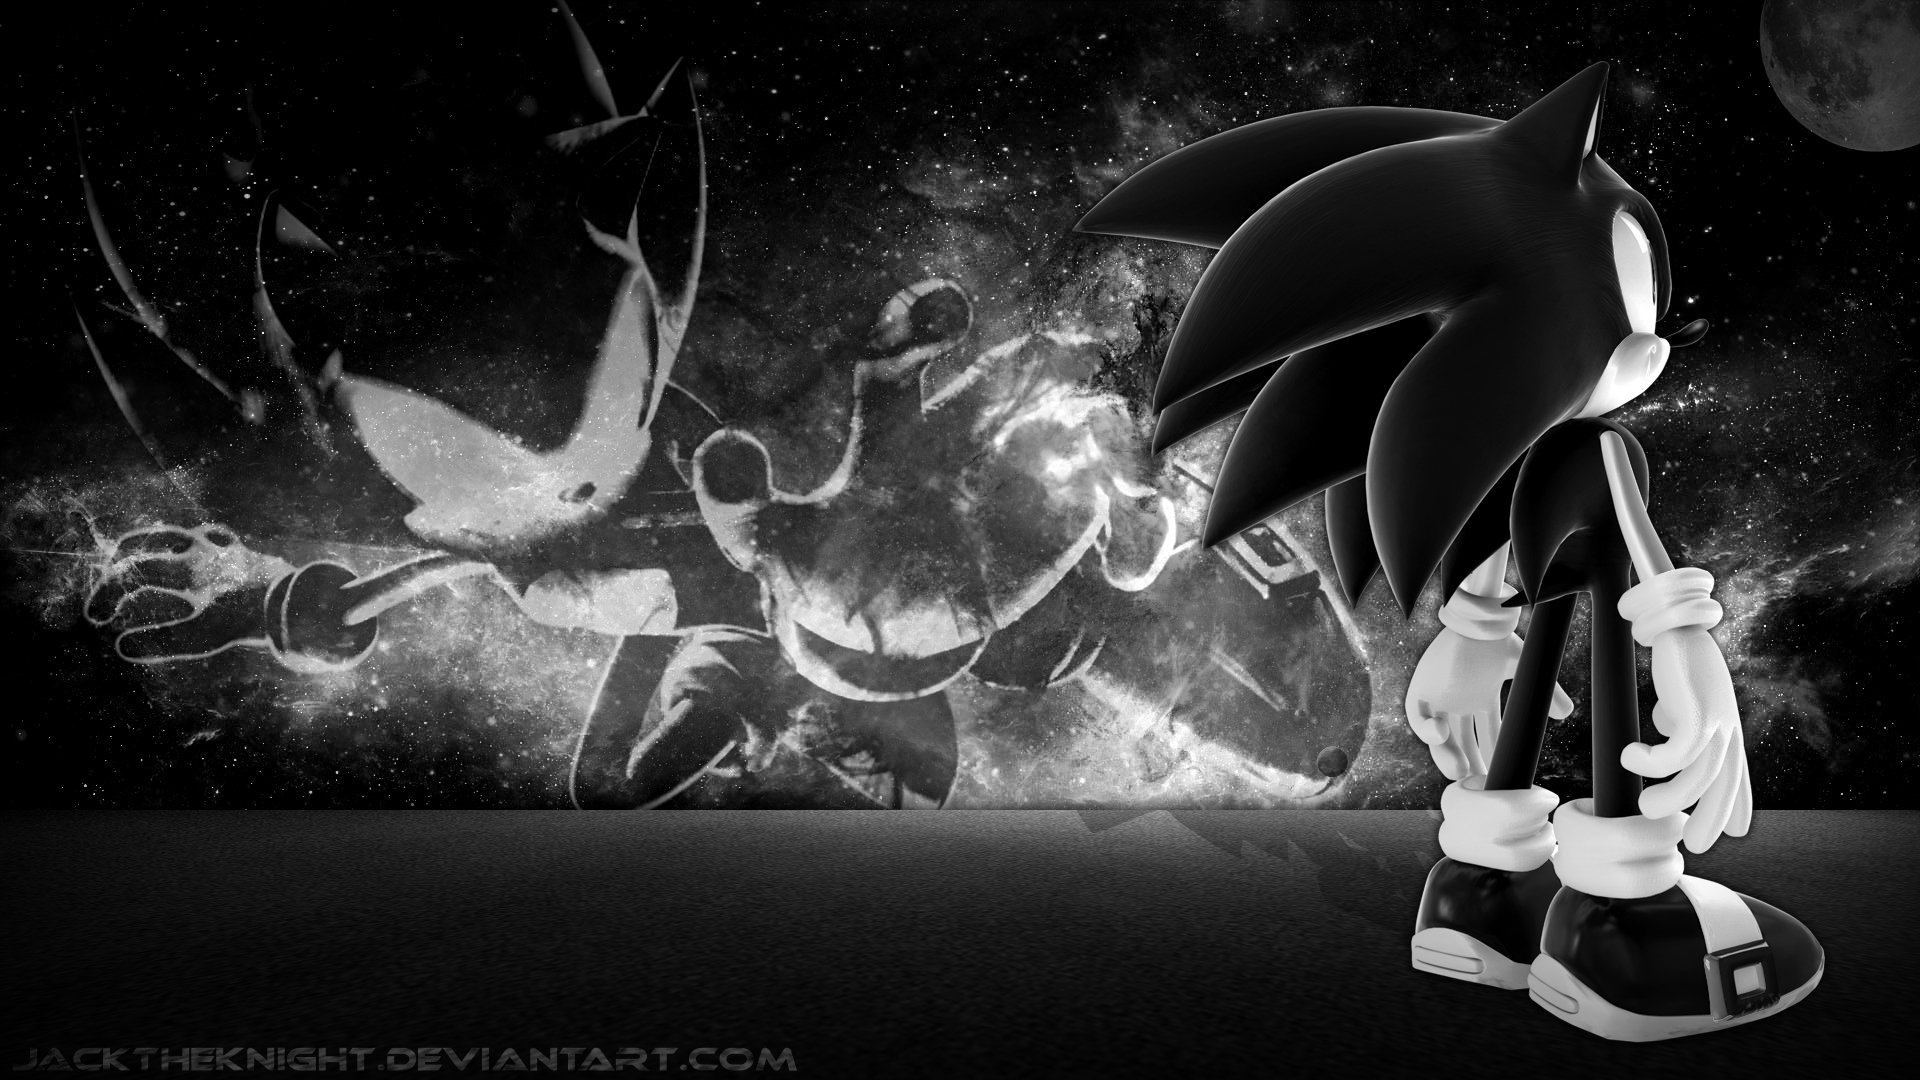 Dark Sonic Vs Super Shadow Wallpapers - Wallpaper Cave